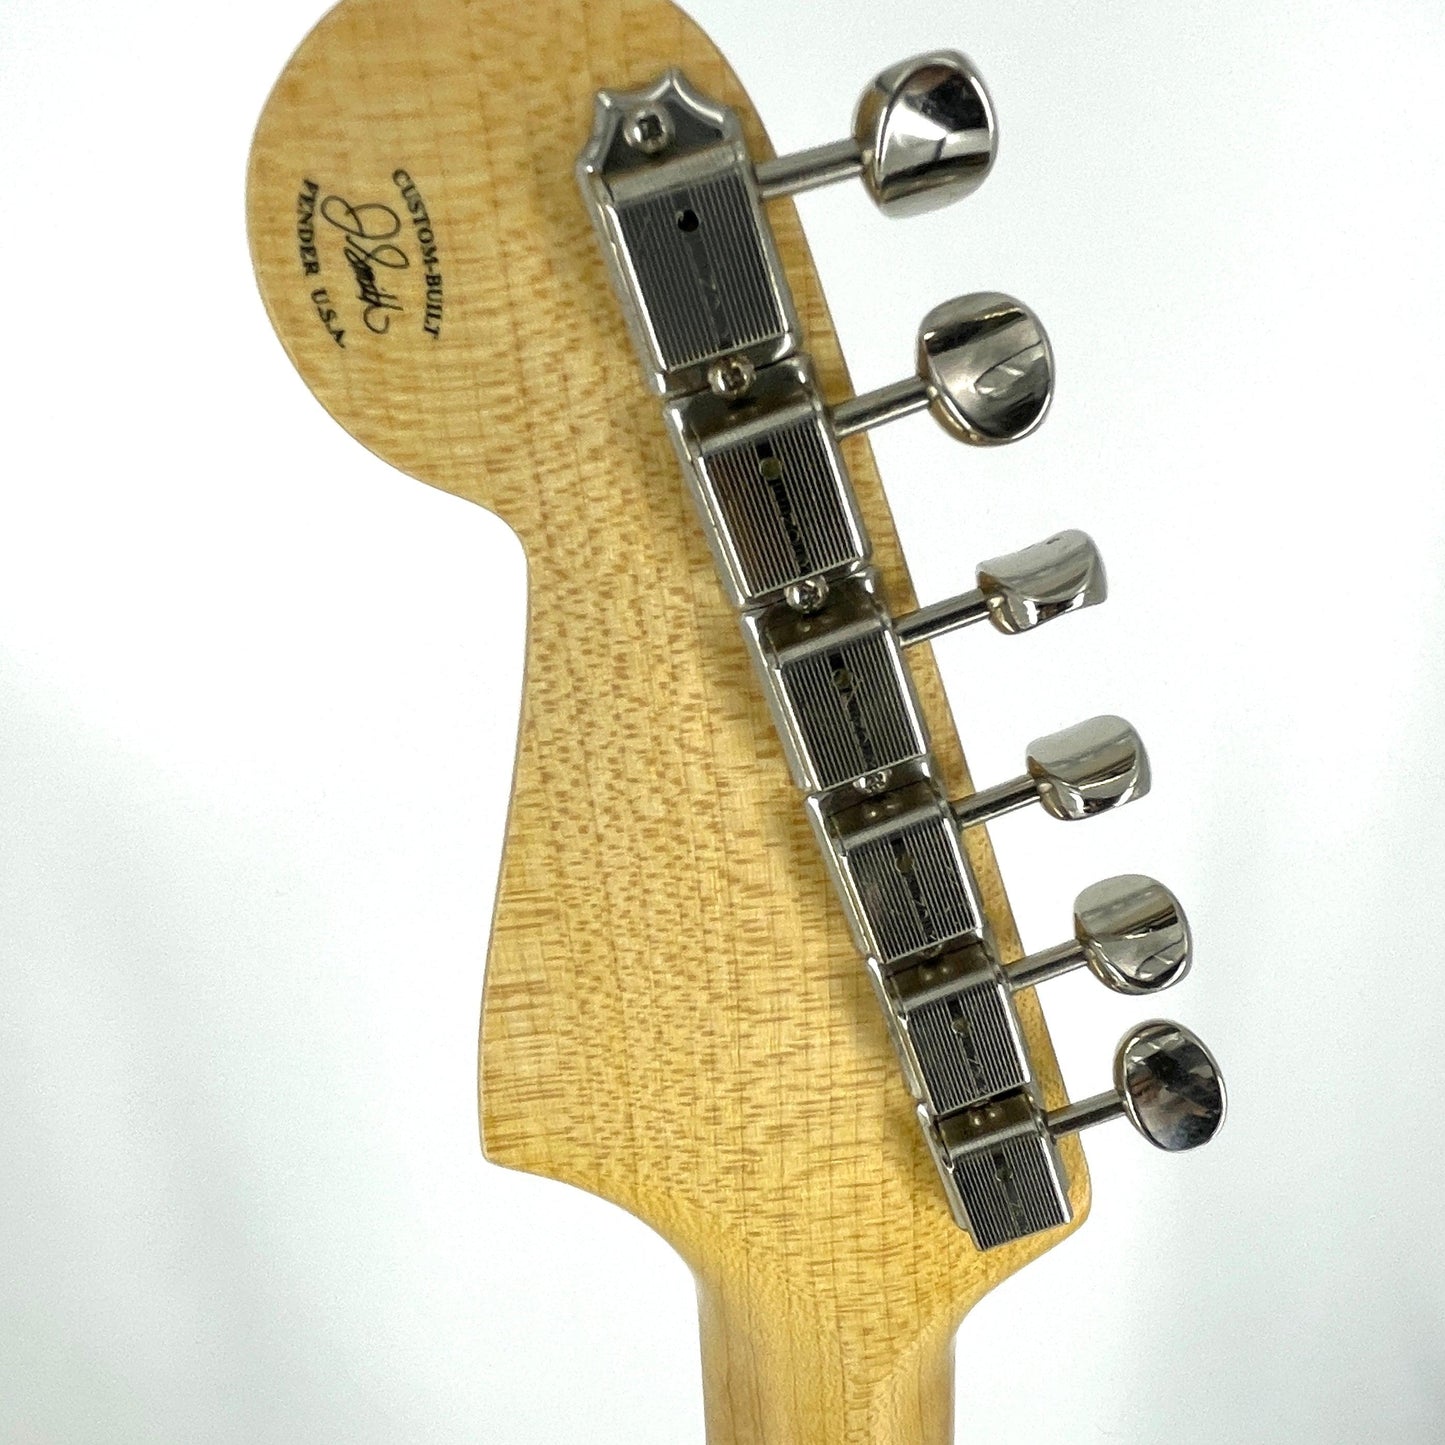 2015 Fender Custom Shop Jason Smith Masterbuilt 1960 HSS Stratocaster NOS - Translucent Turquoise & Black Grain